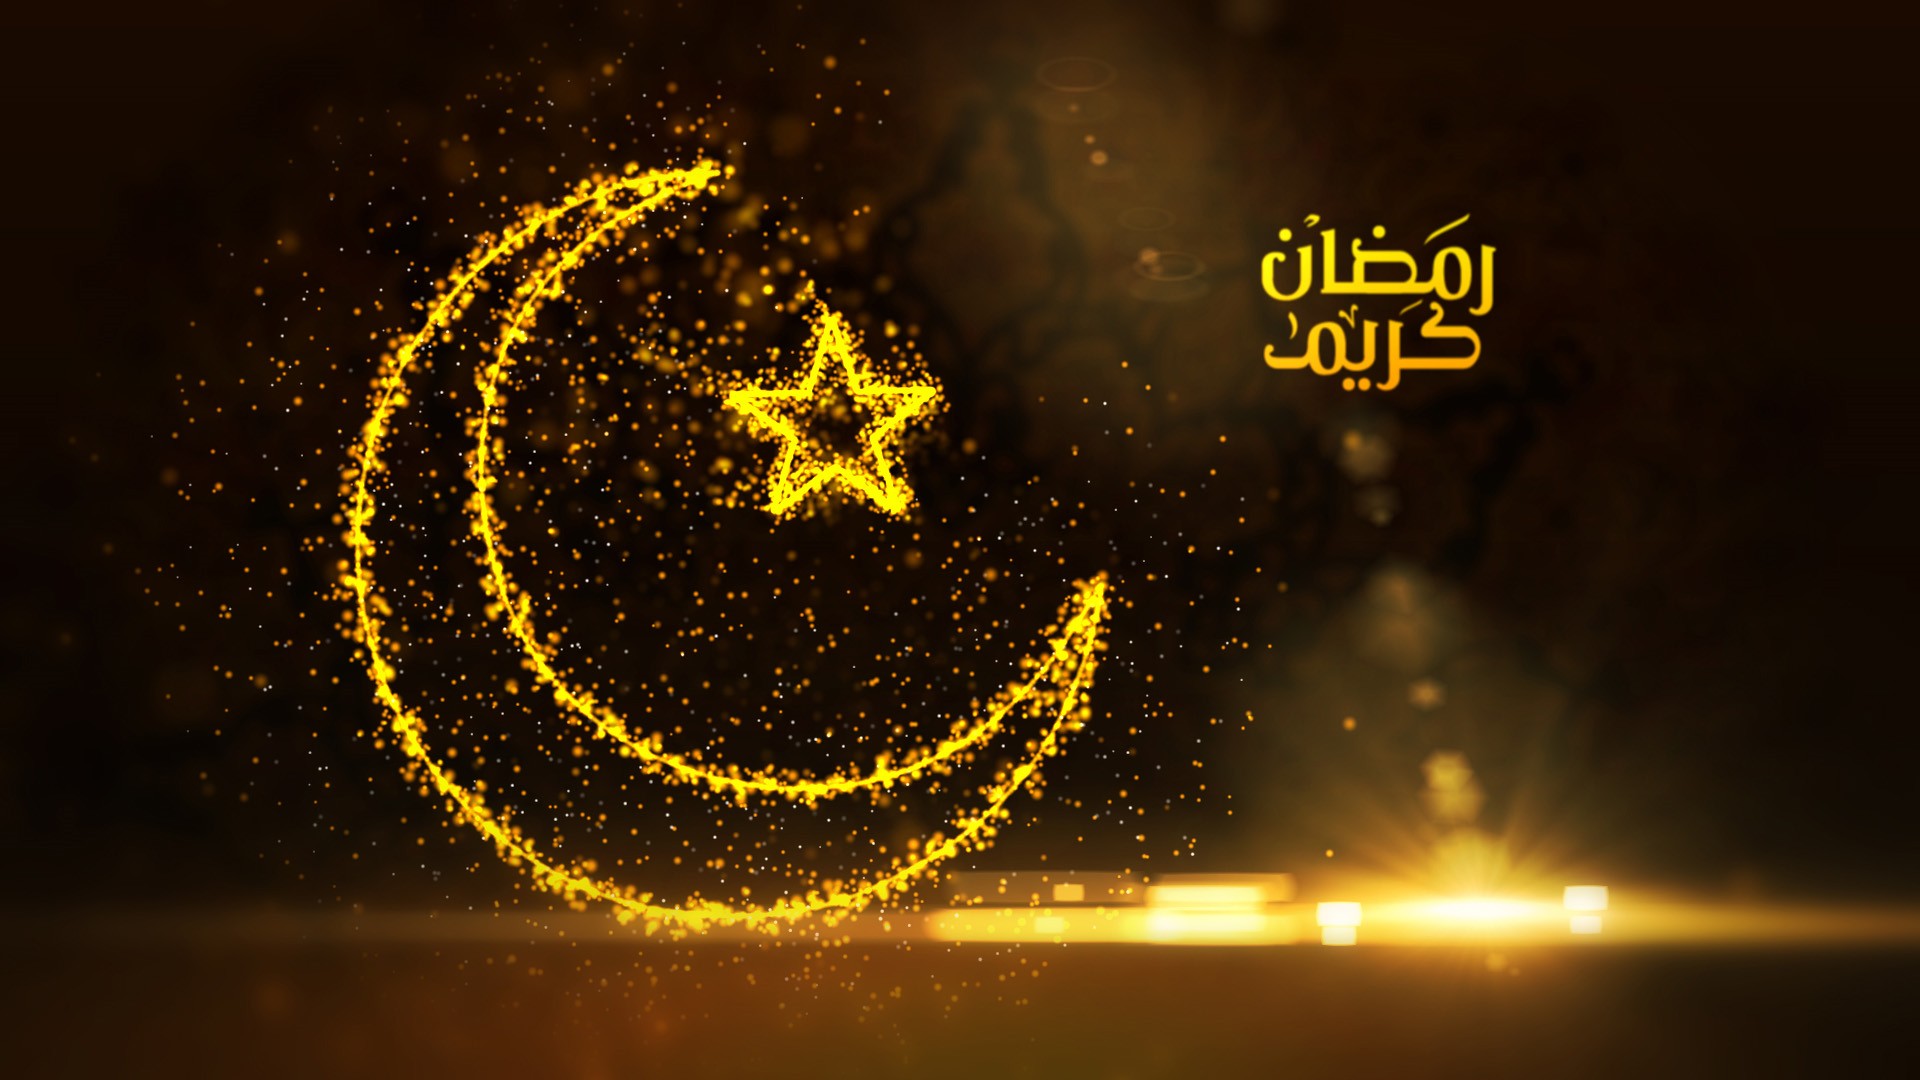 Happy Ramadan Wallpapers 2019, ramadan wallpaper hd free download